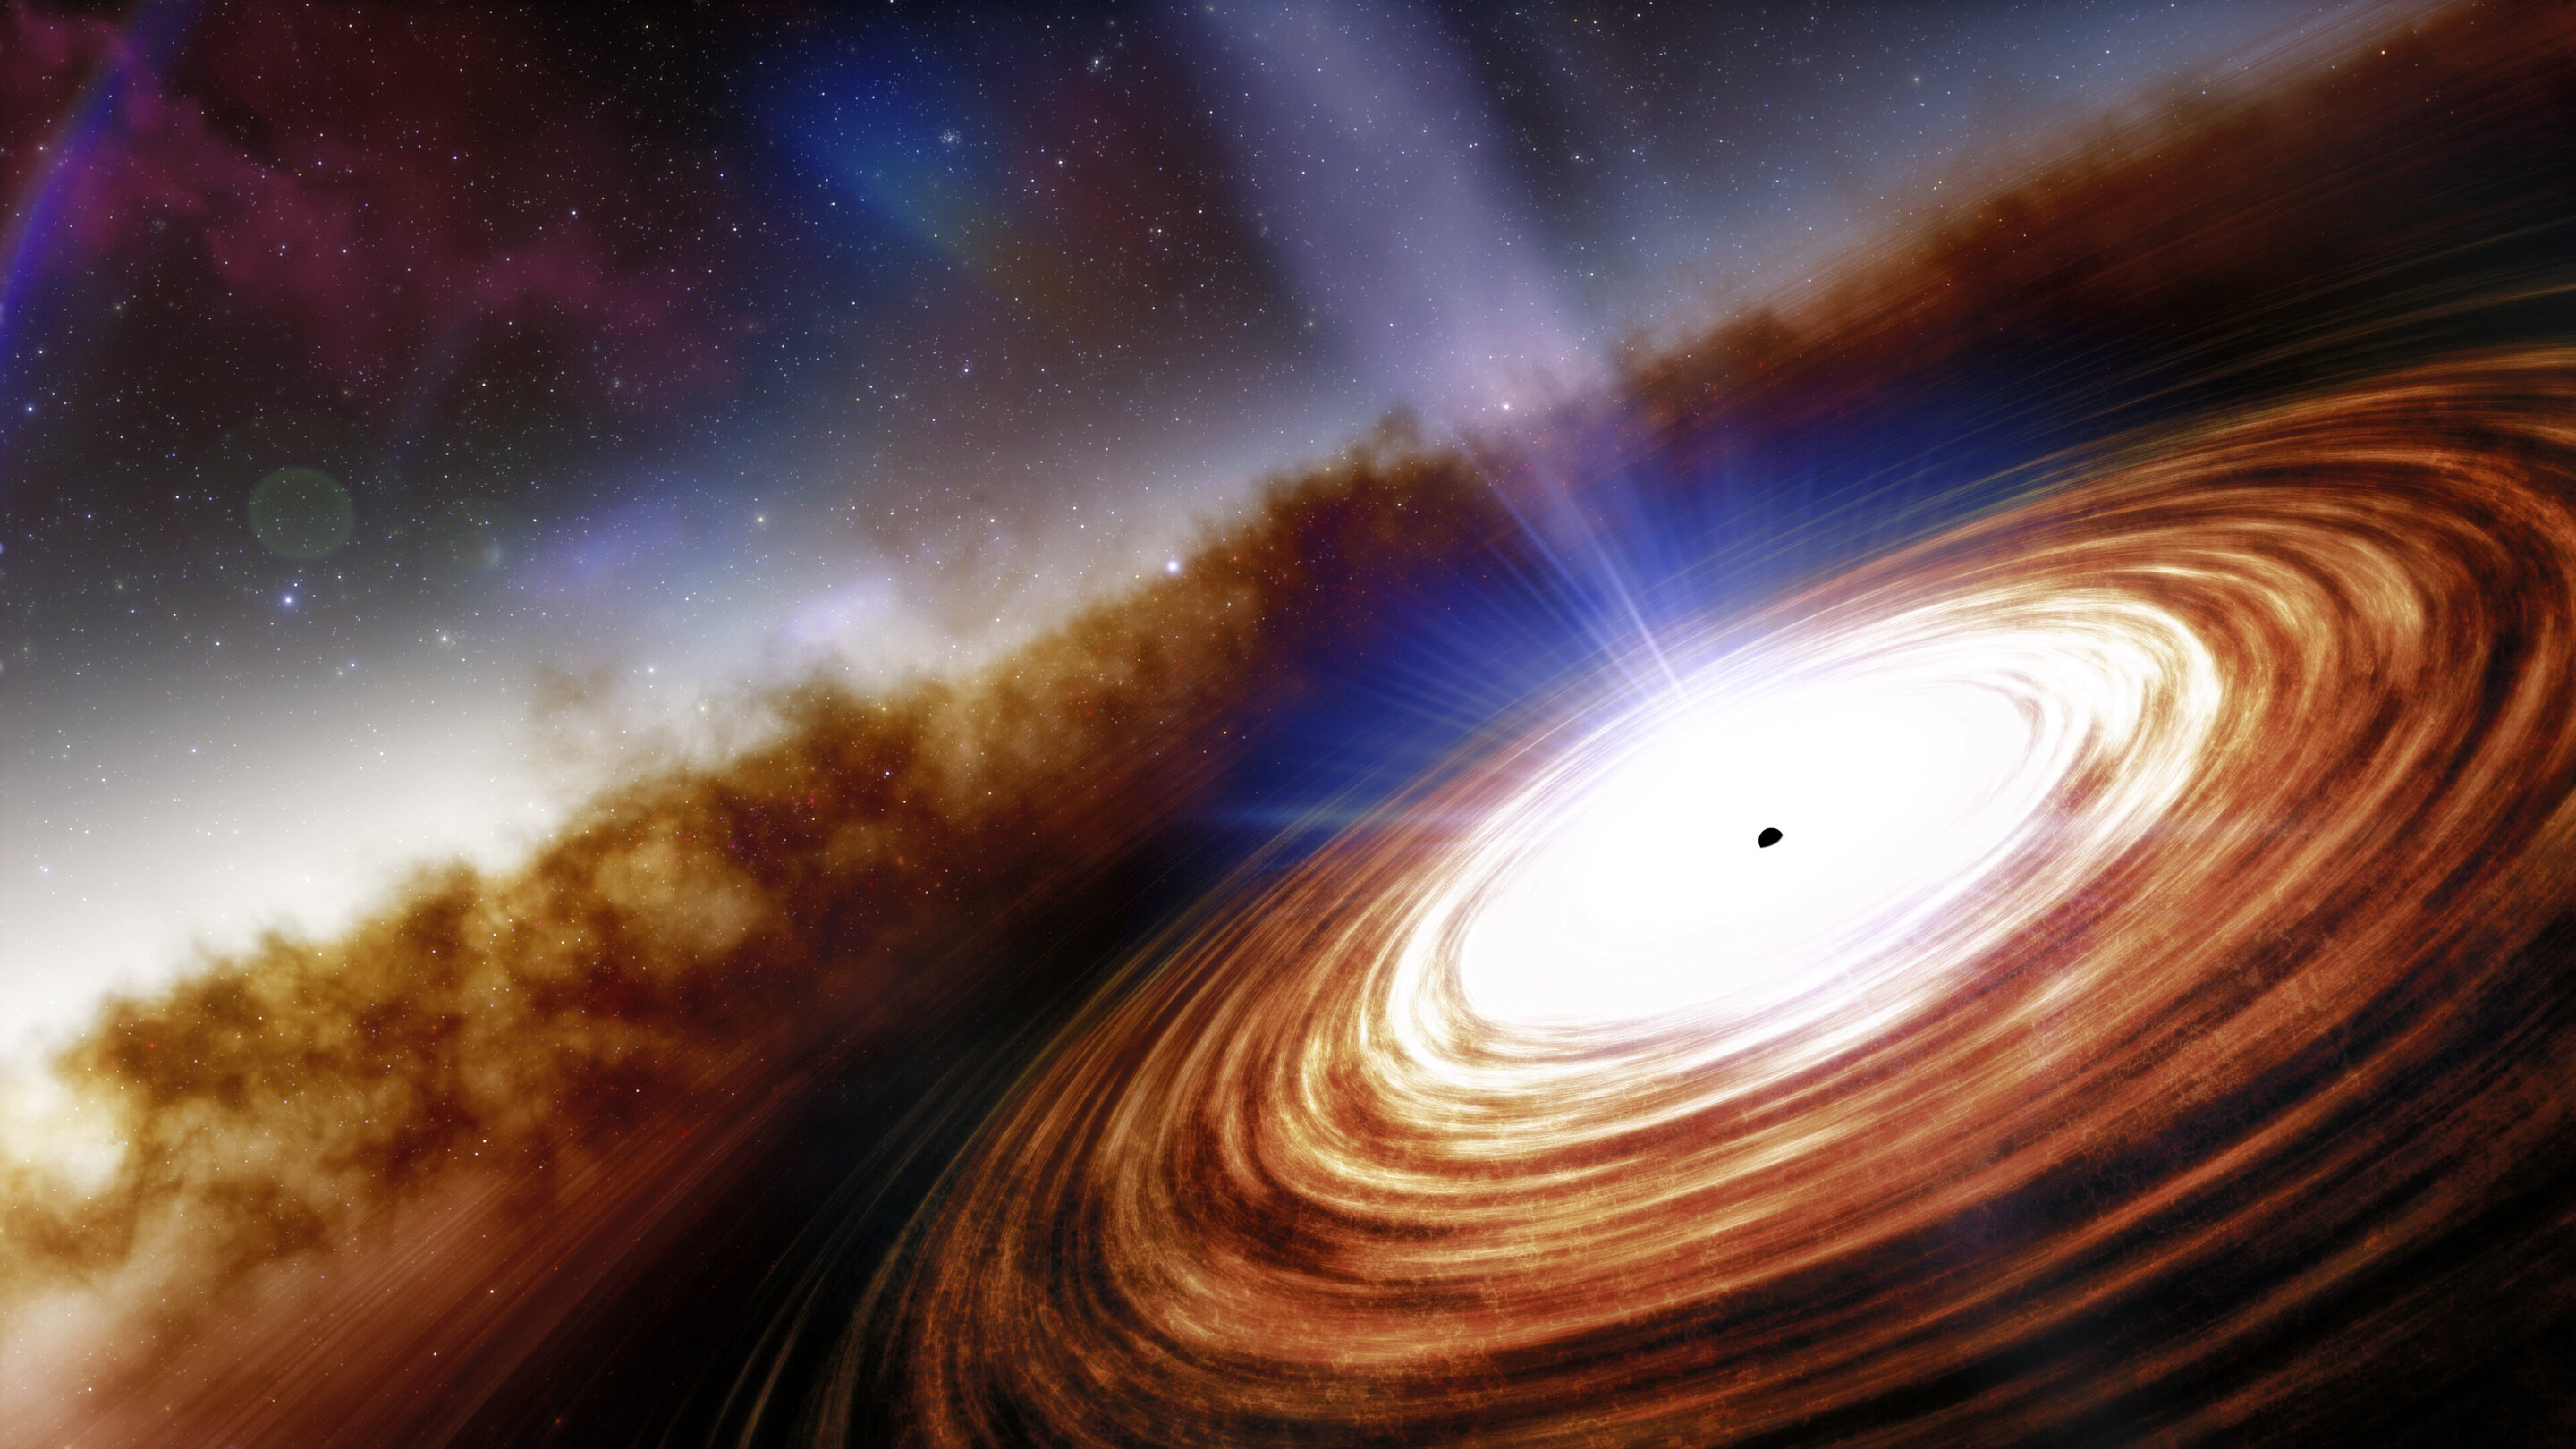 The farthest discovered quasar sheds light on how black holes grow